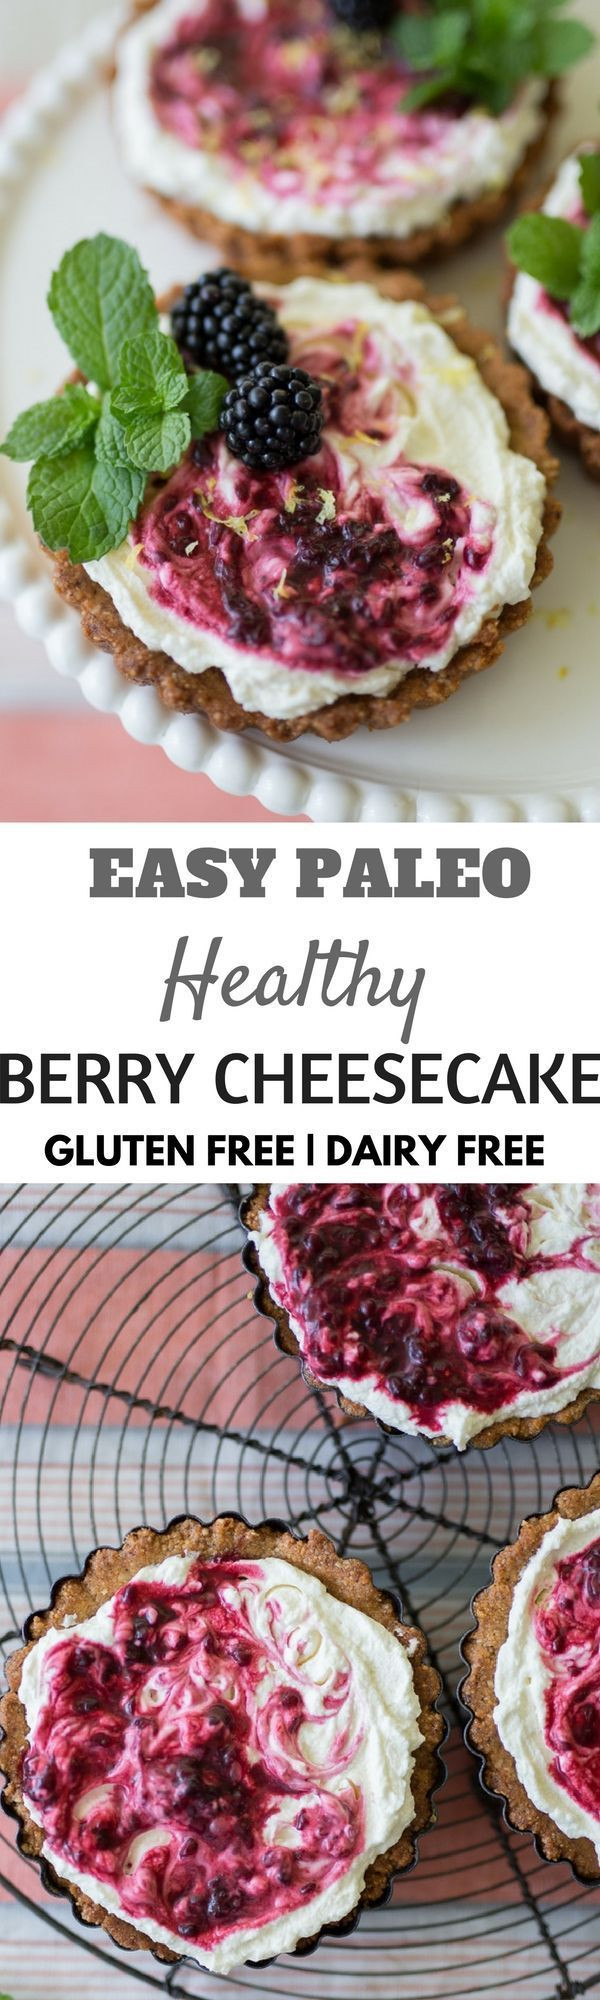 Paleo Summer Desserts
 Best 25 Crossfit cake ideas on Pinterest